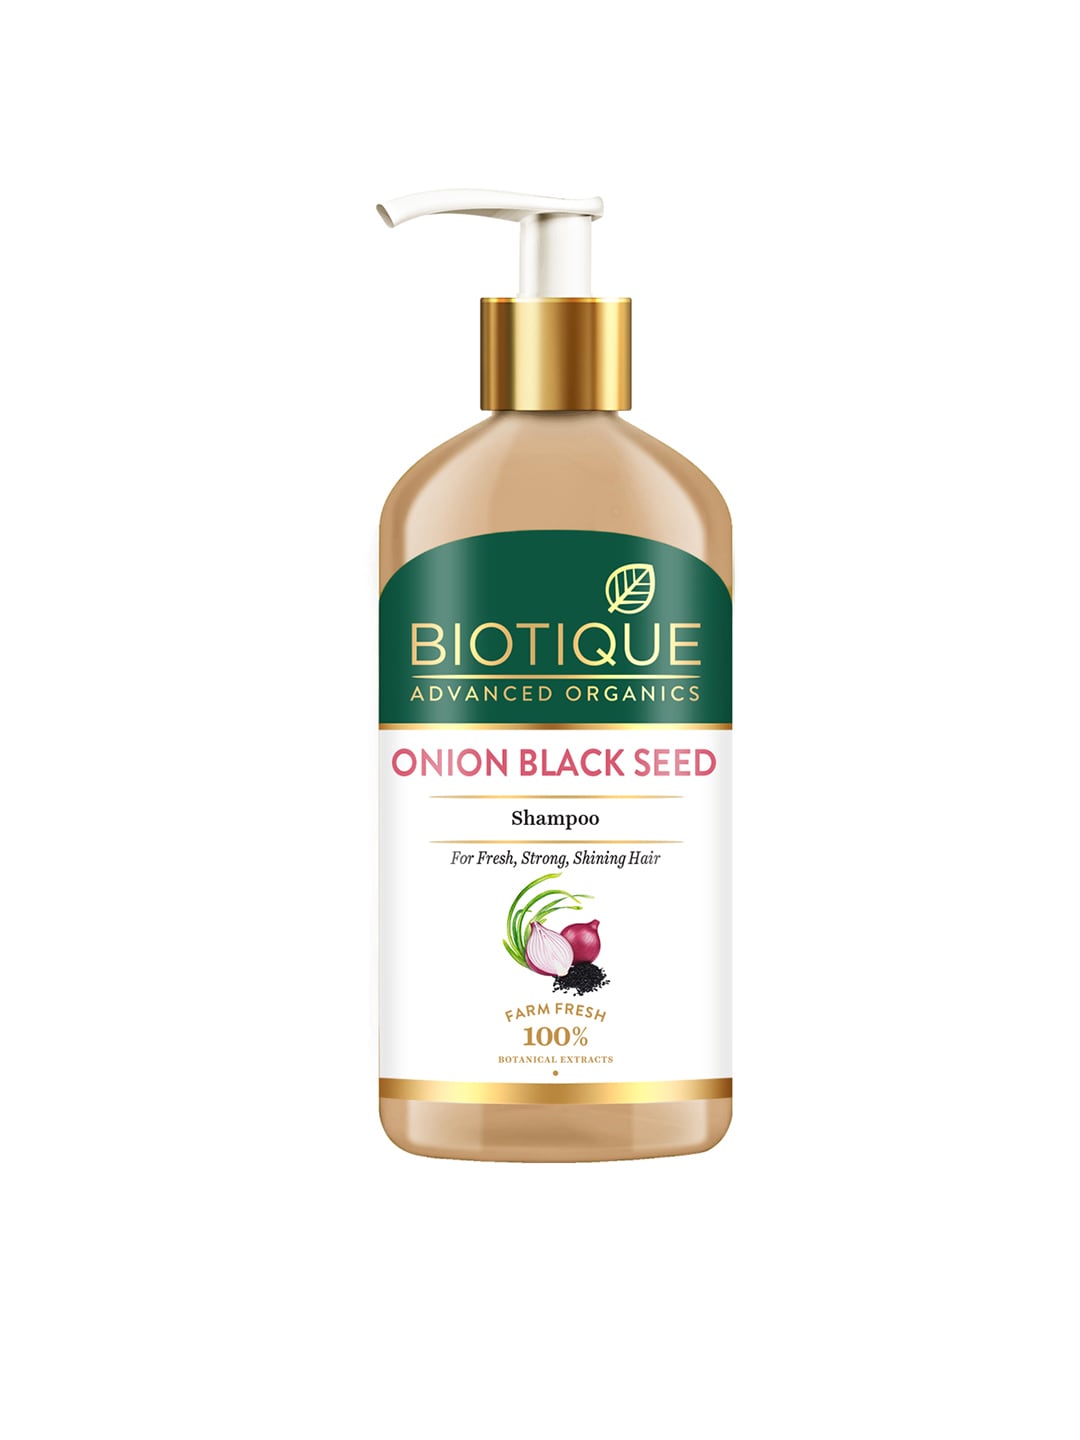 Biotique Advanced Organics Onion Black Seed Shampoo 300 ml Price in India